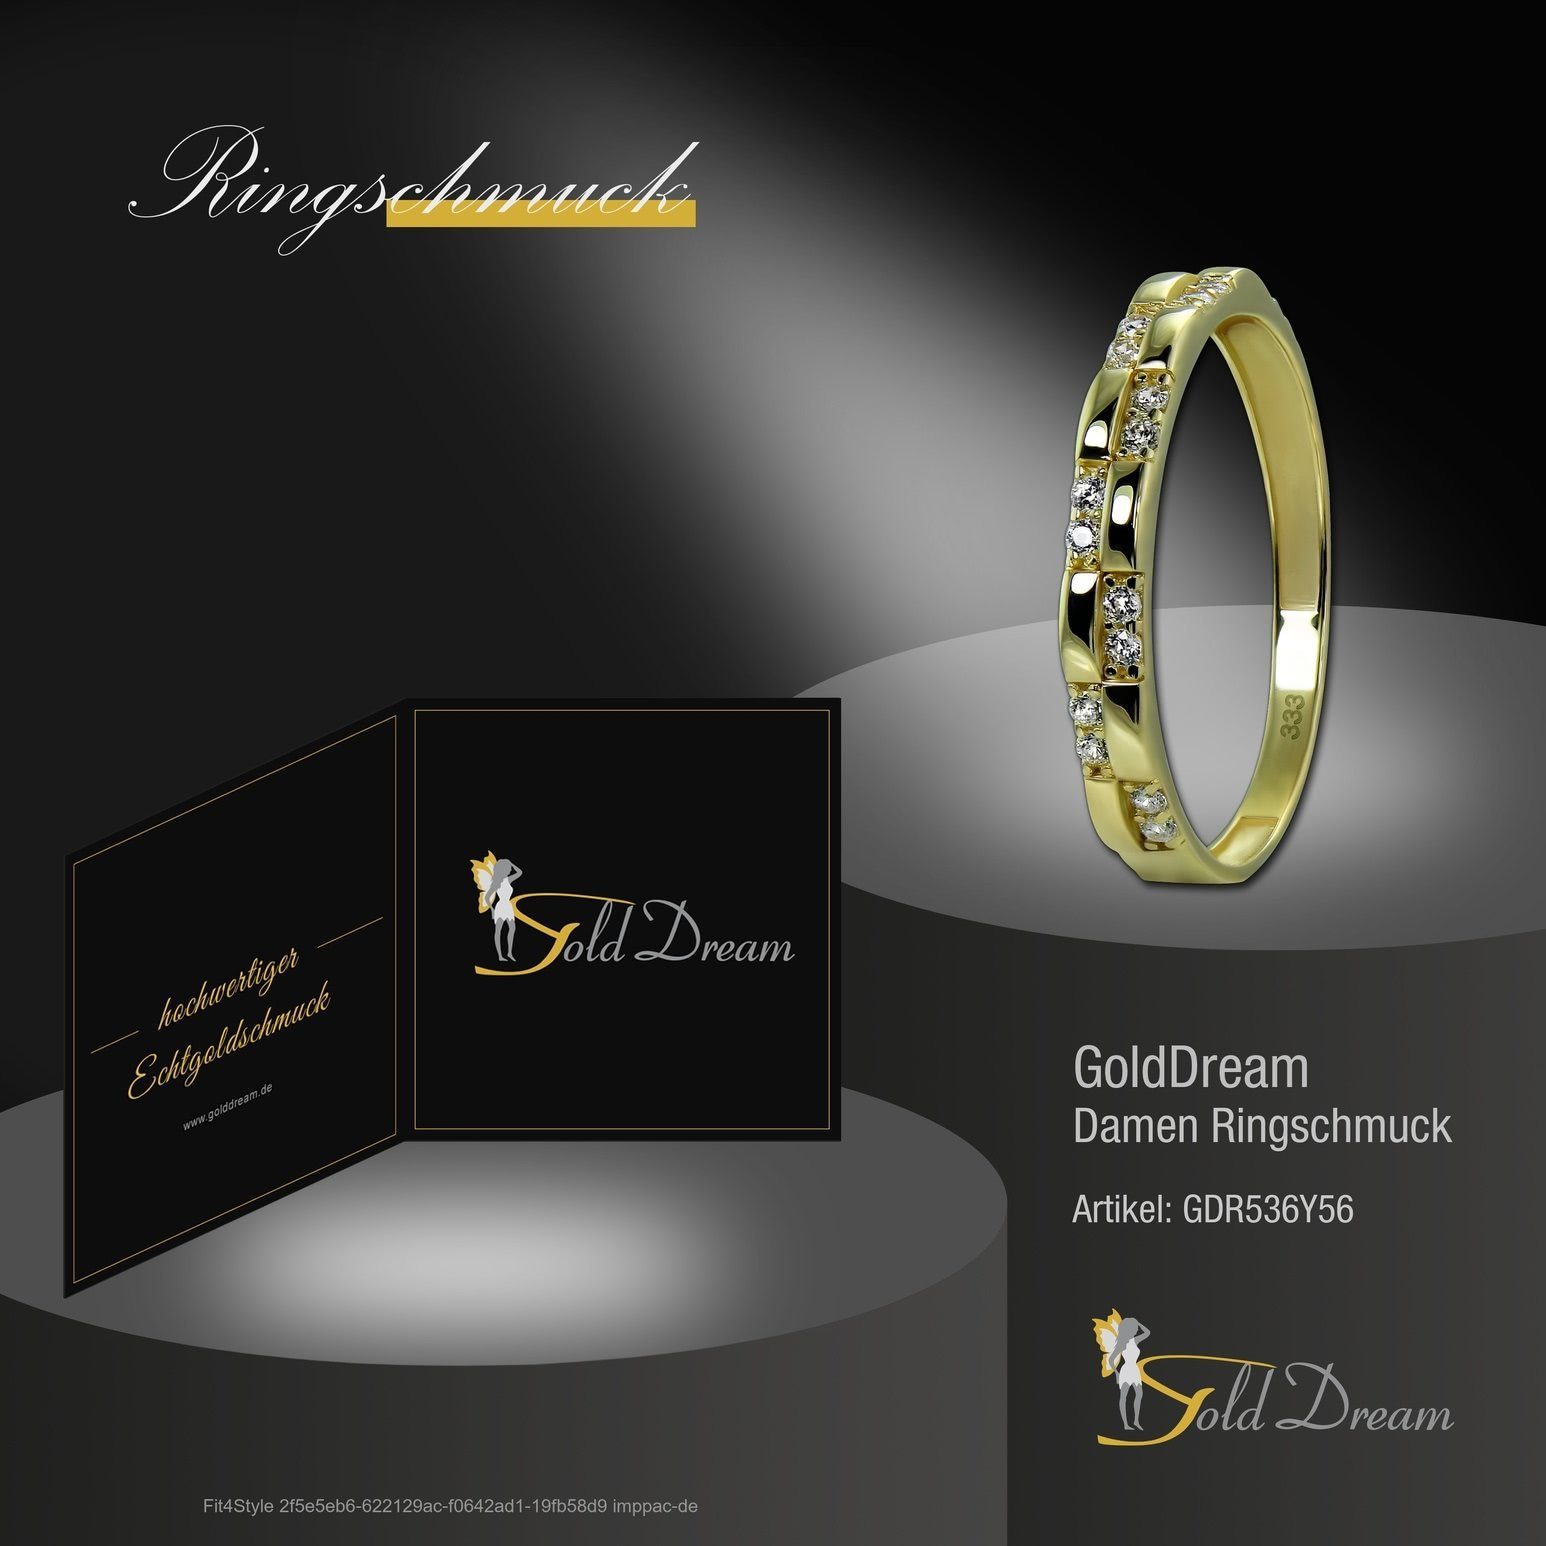 8 Fashion Farbe: Gr.56 GoldDream GoldDream Karat, (Fingerring), Ring - Gelbgold Ring Gold gold, Fashion weiß Damen 333 Goldring